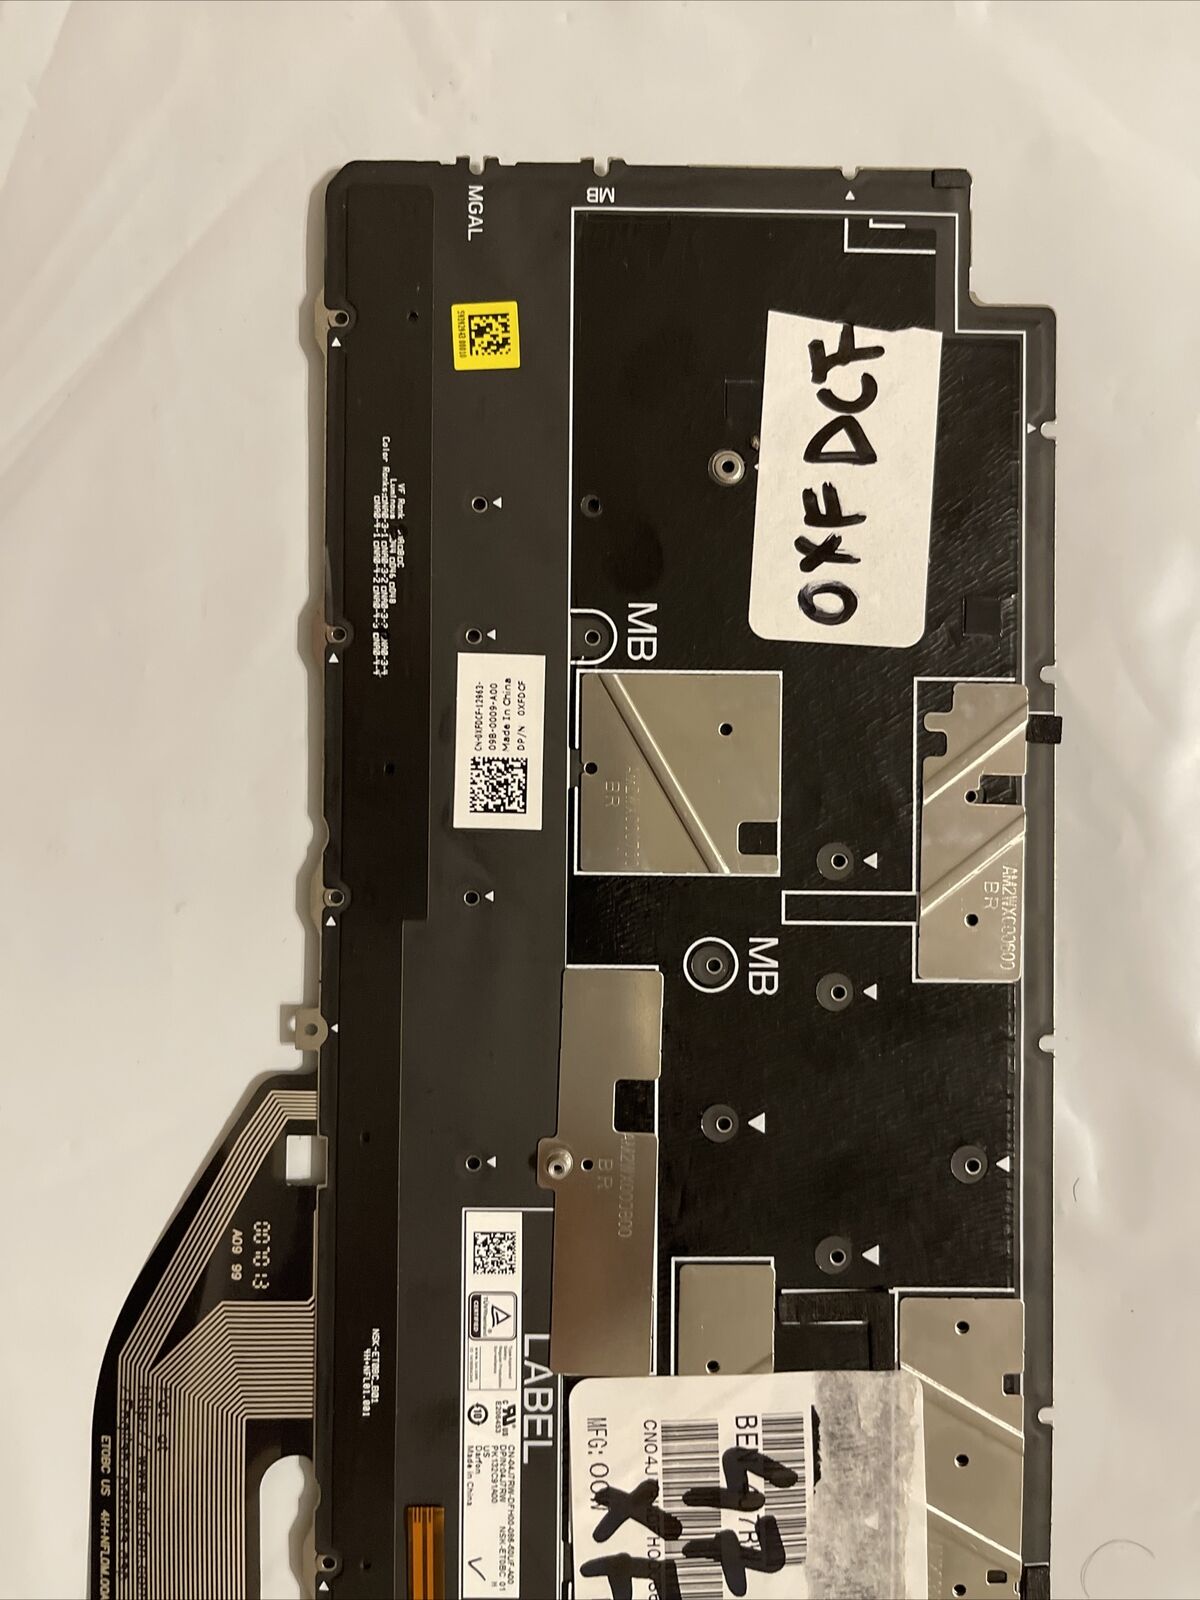 Genuine Dell  XPS 13 7390 2-in-1 US-English Backlit Keyboard XFDCF KTR02 4J7RW